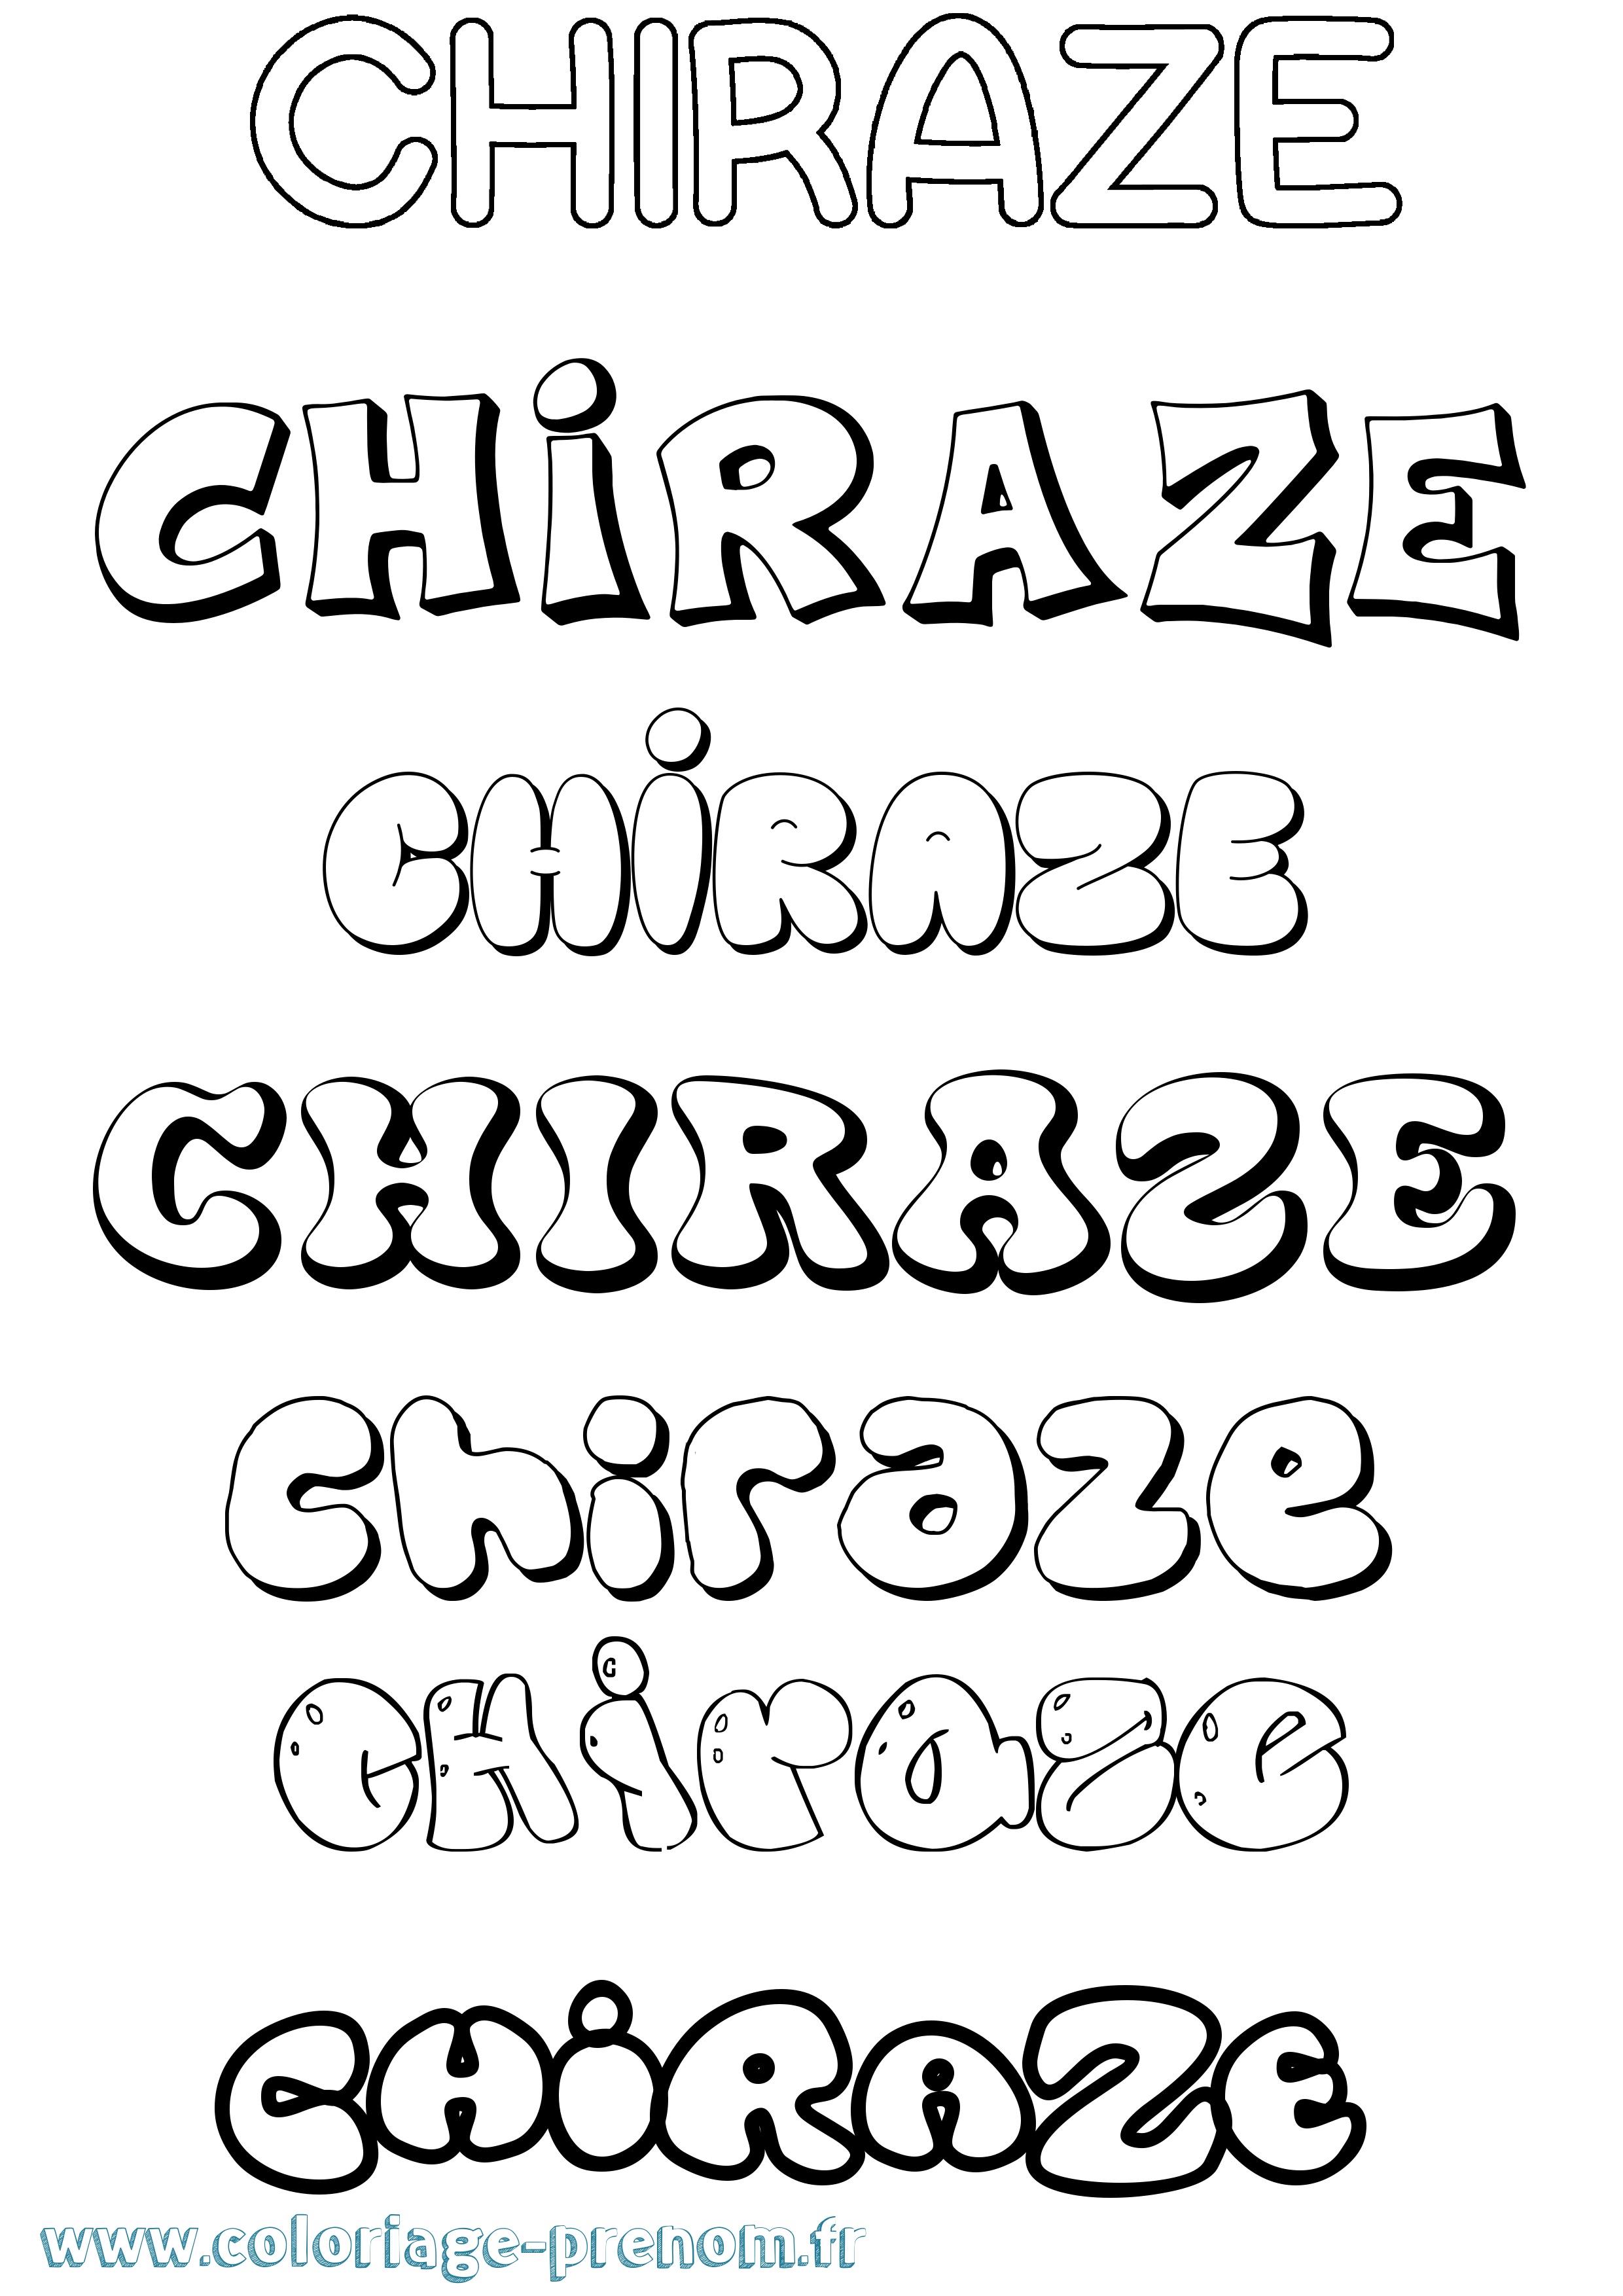 Coloriage prénom Chiraze Bubble